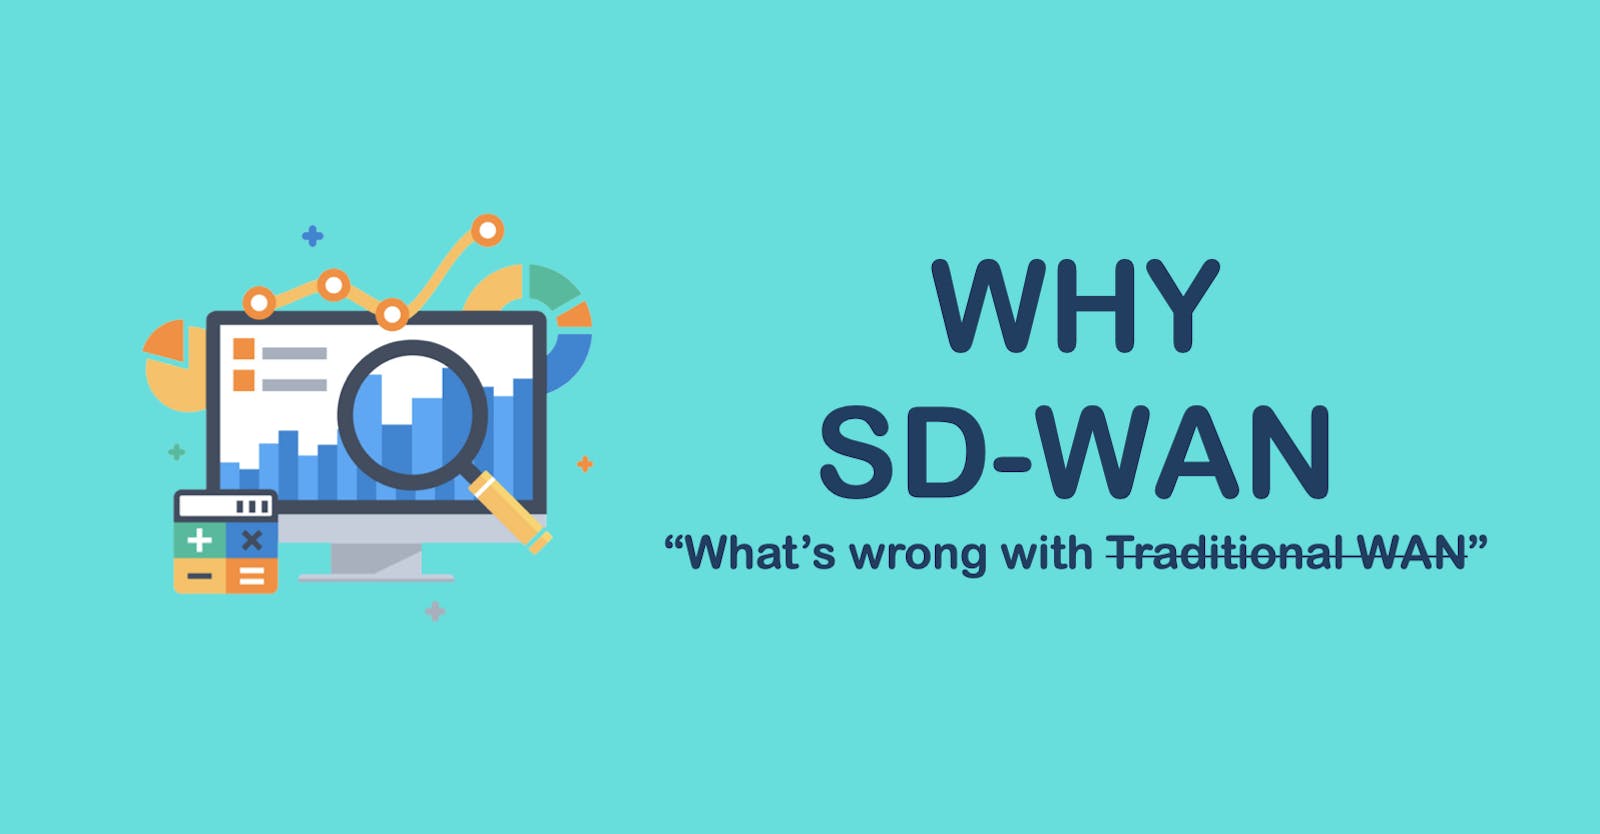 [Part 1] Why SD-WAN?